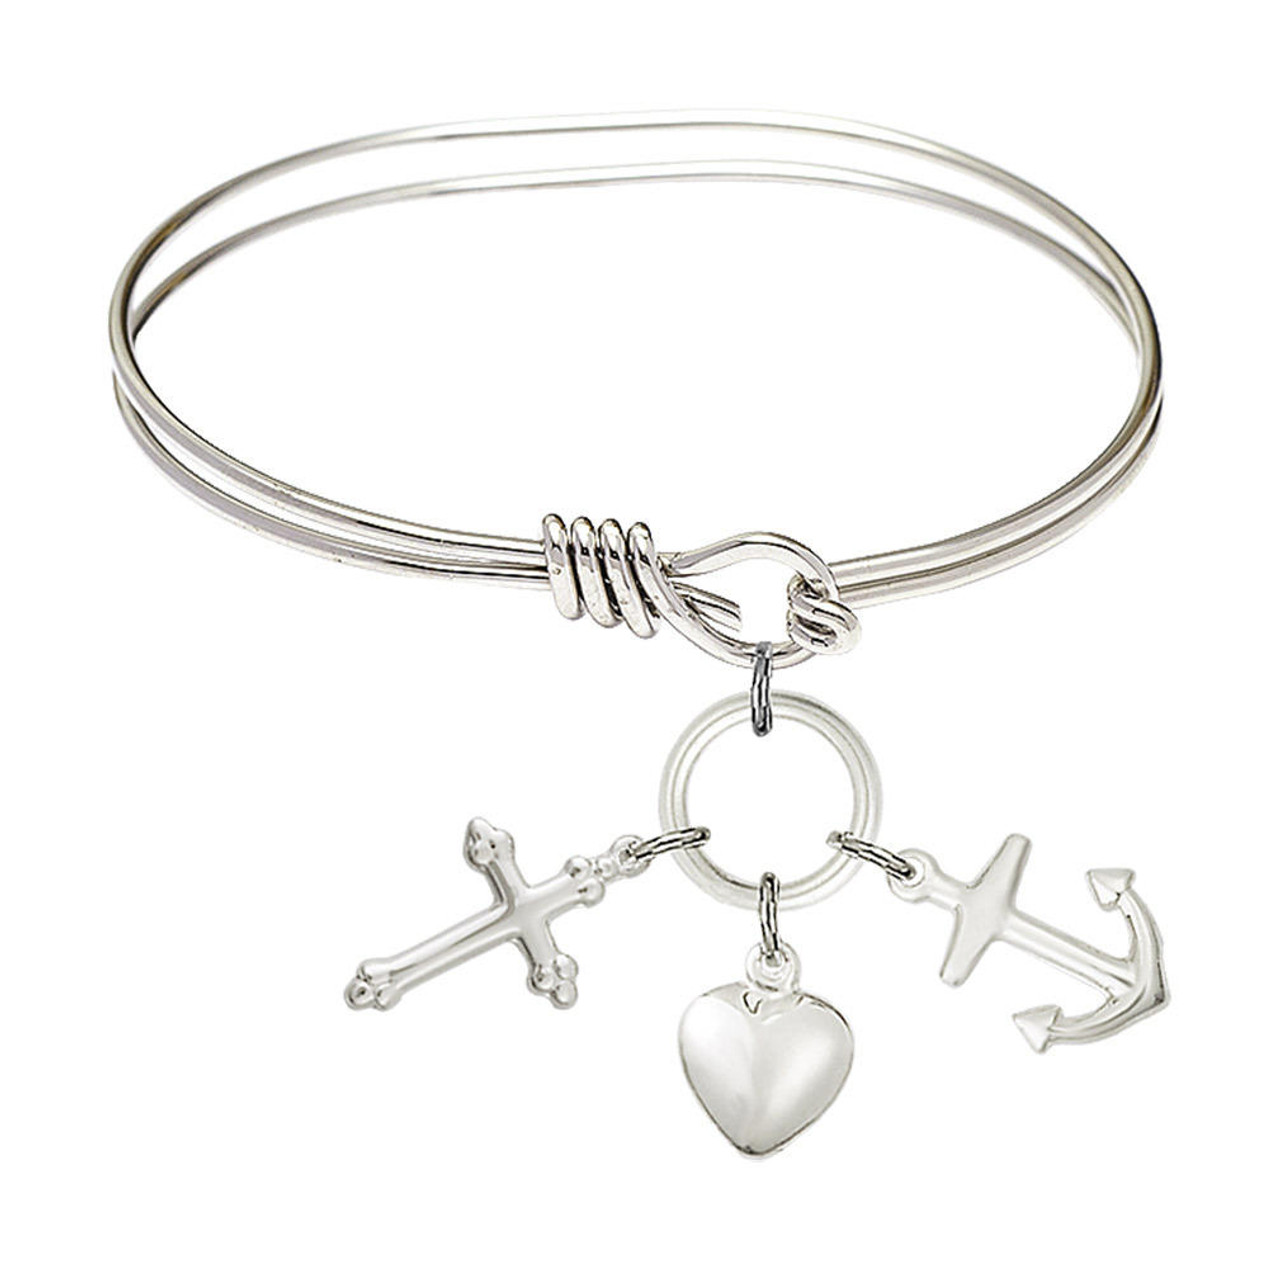 Faith, Hope & Charity Eye Hook Bangle Bracelet - Sterling Silver